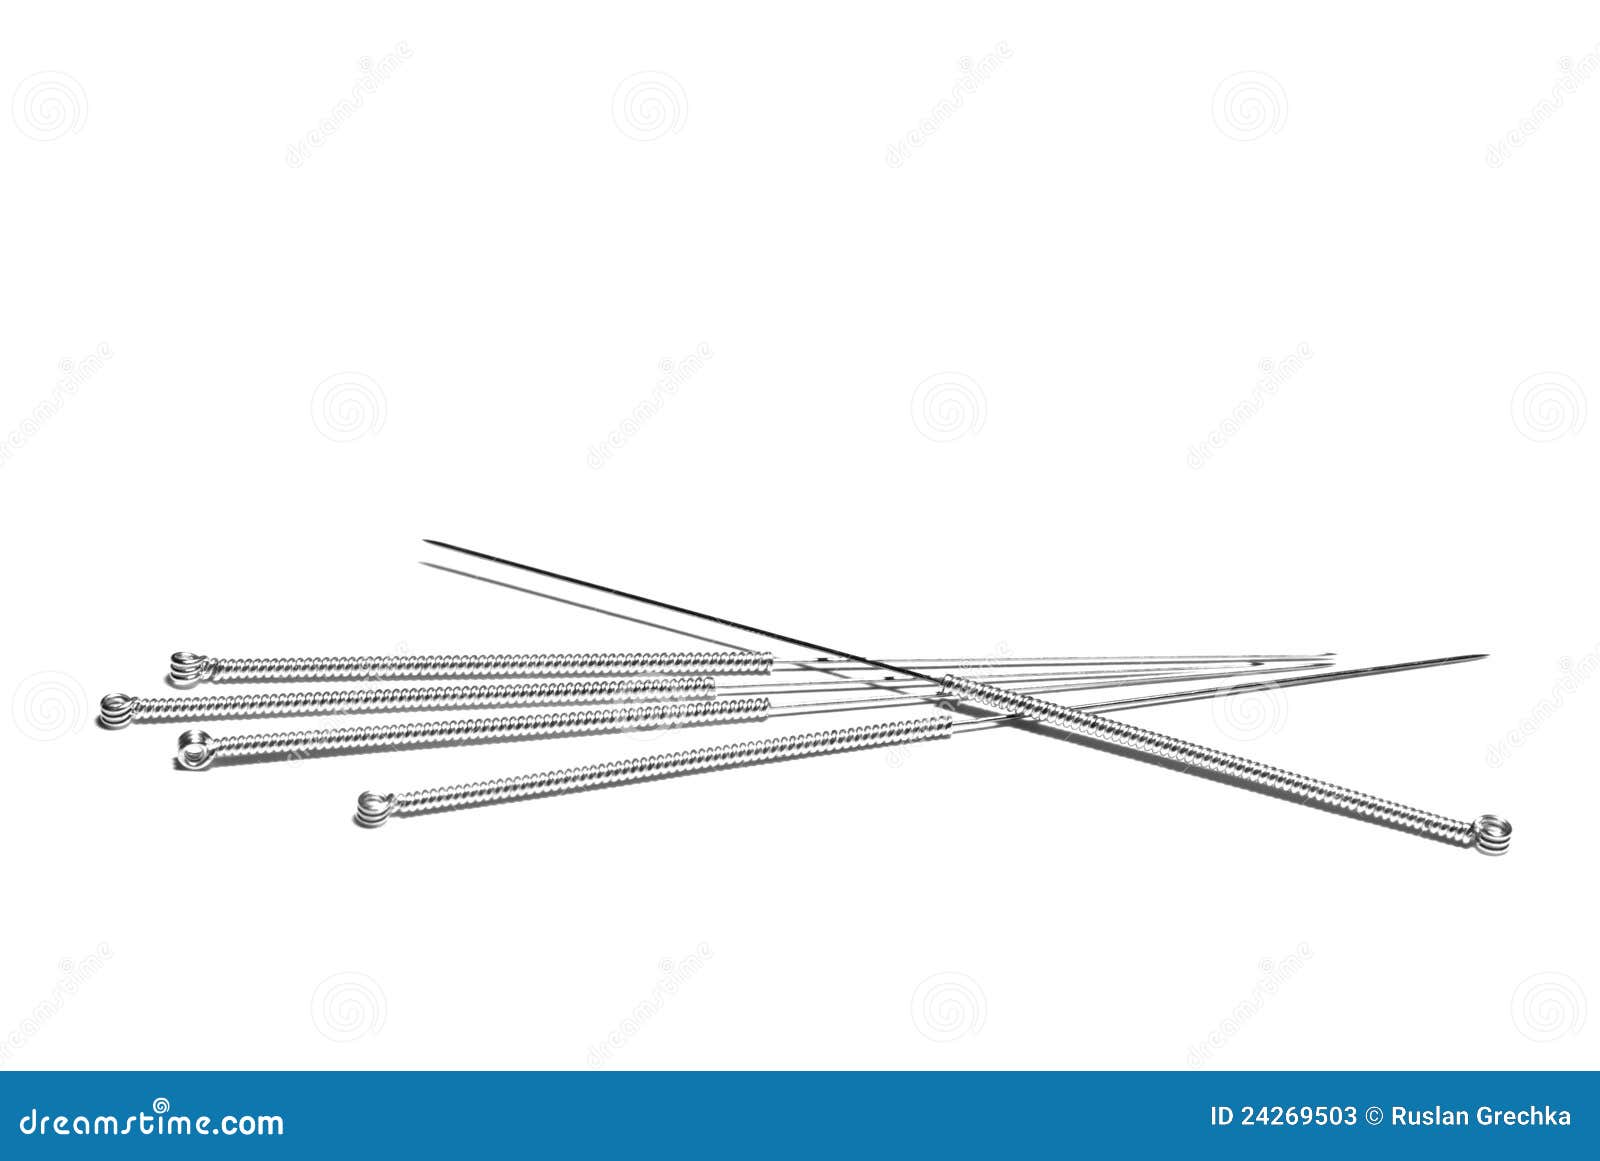 acupuncture-needles-24269503.jpg